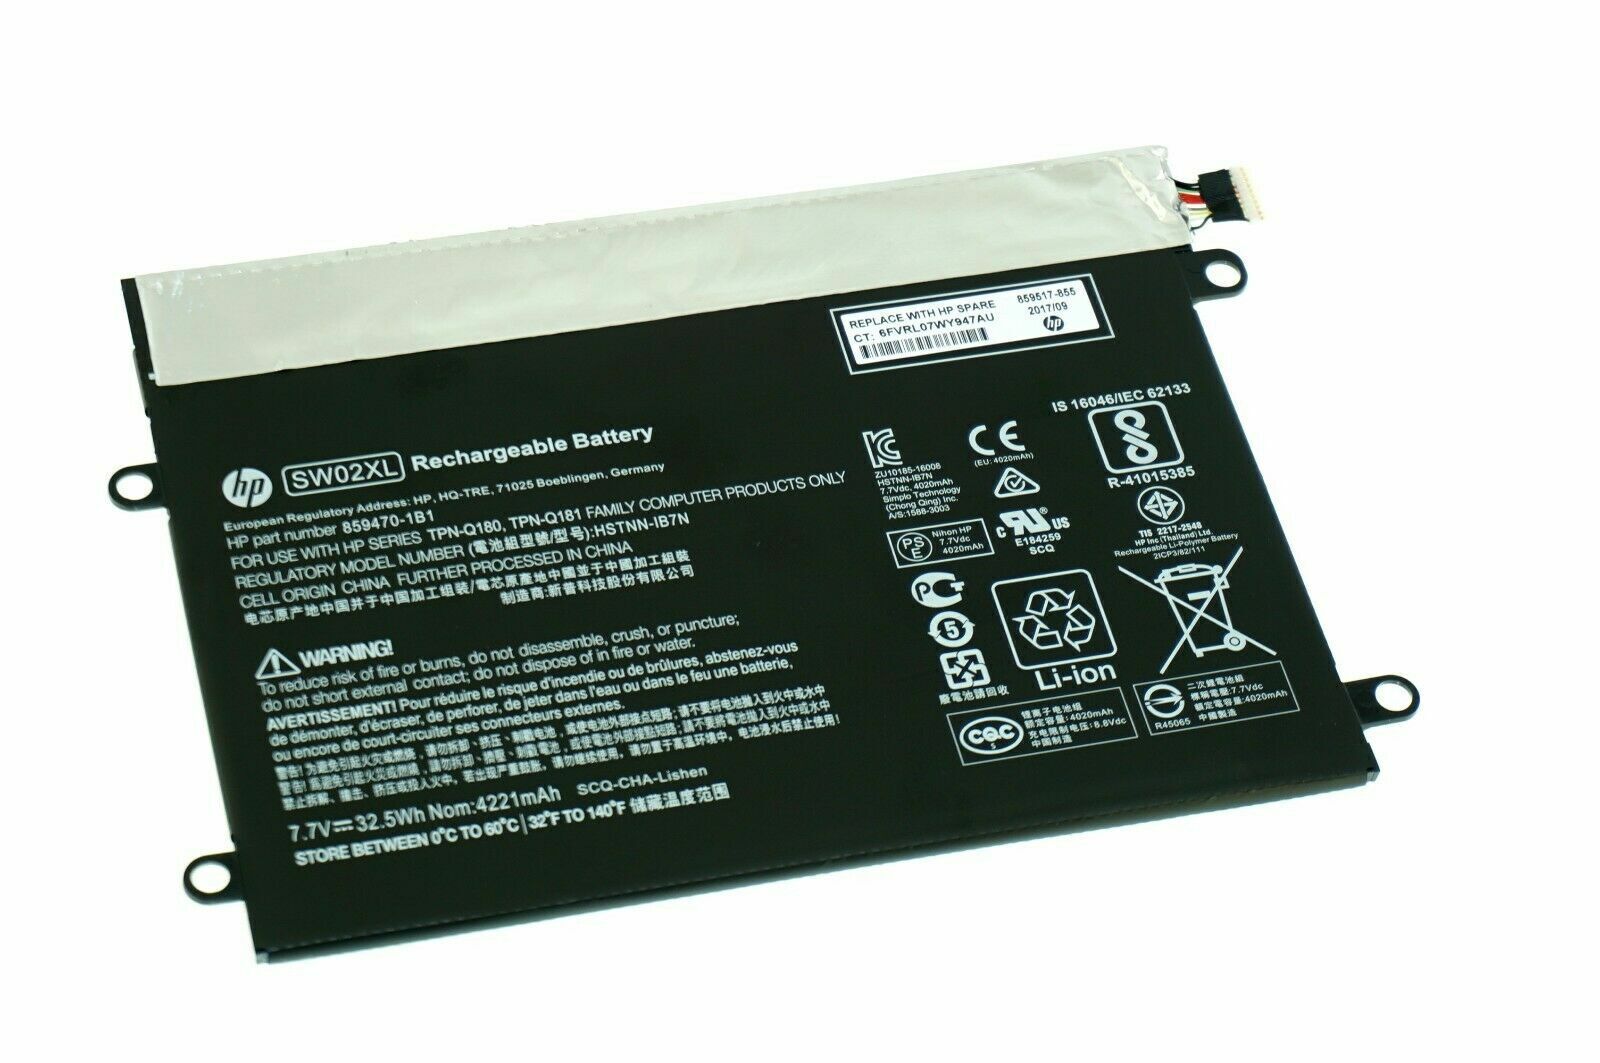 HP SW02XL New Genuine Battery Pack Notebook X2 10-P 210 G2 HSTNN-IB7N 859470-1B1 859470-421 889517-855